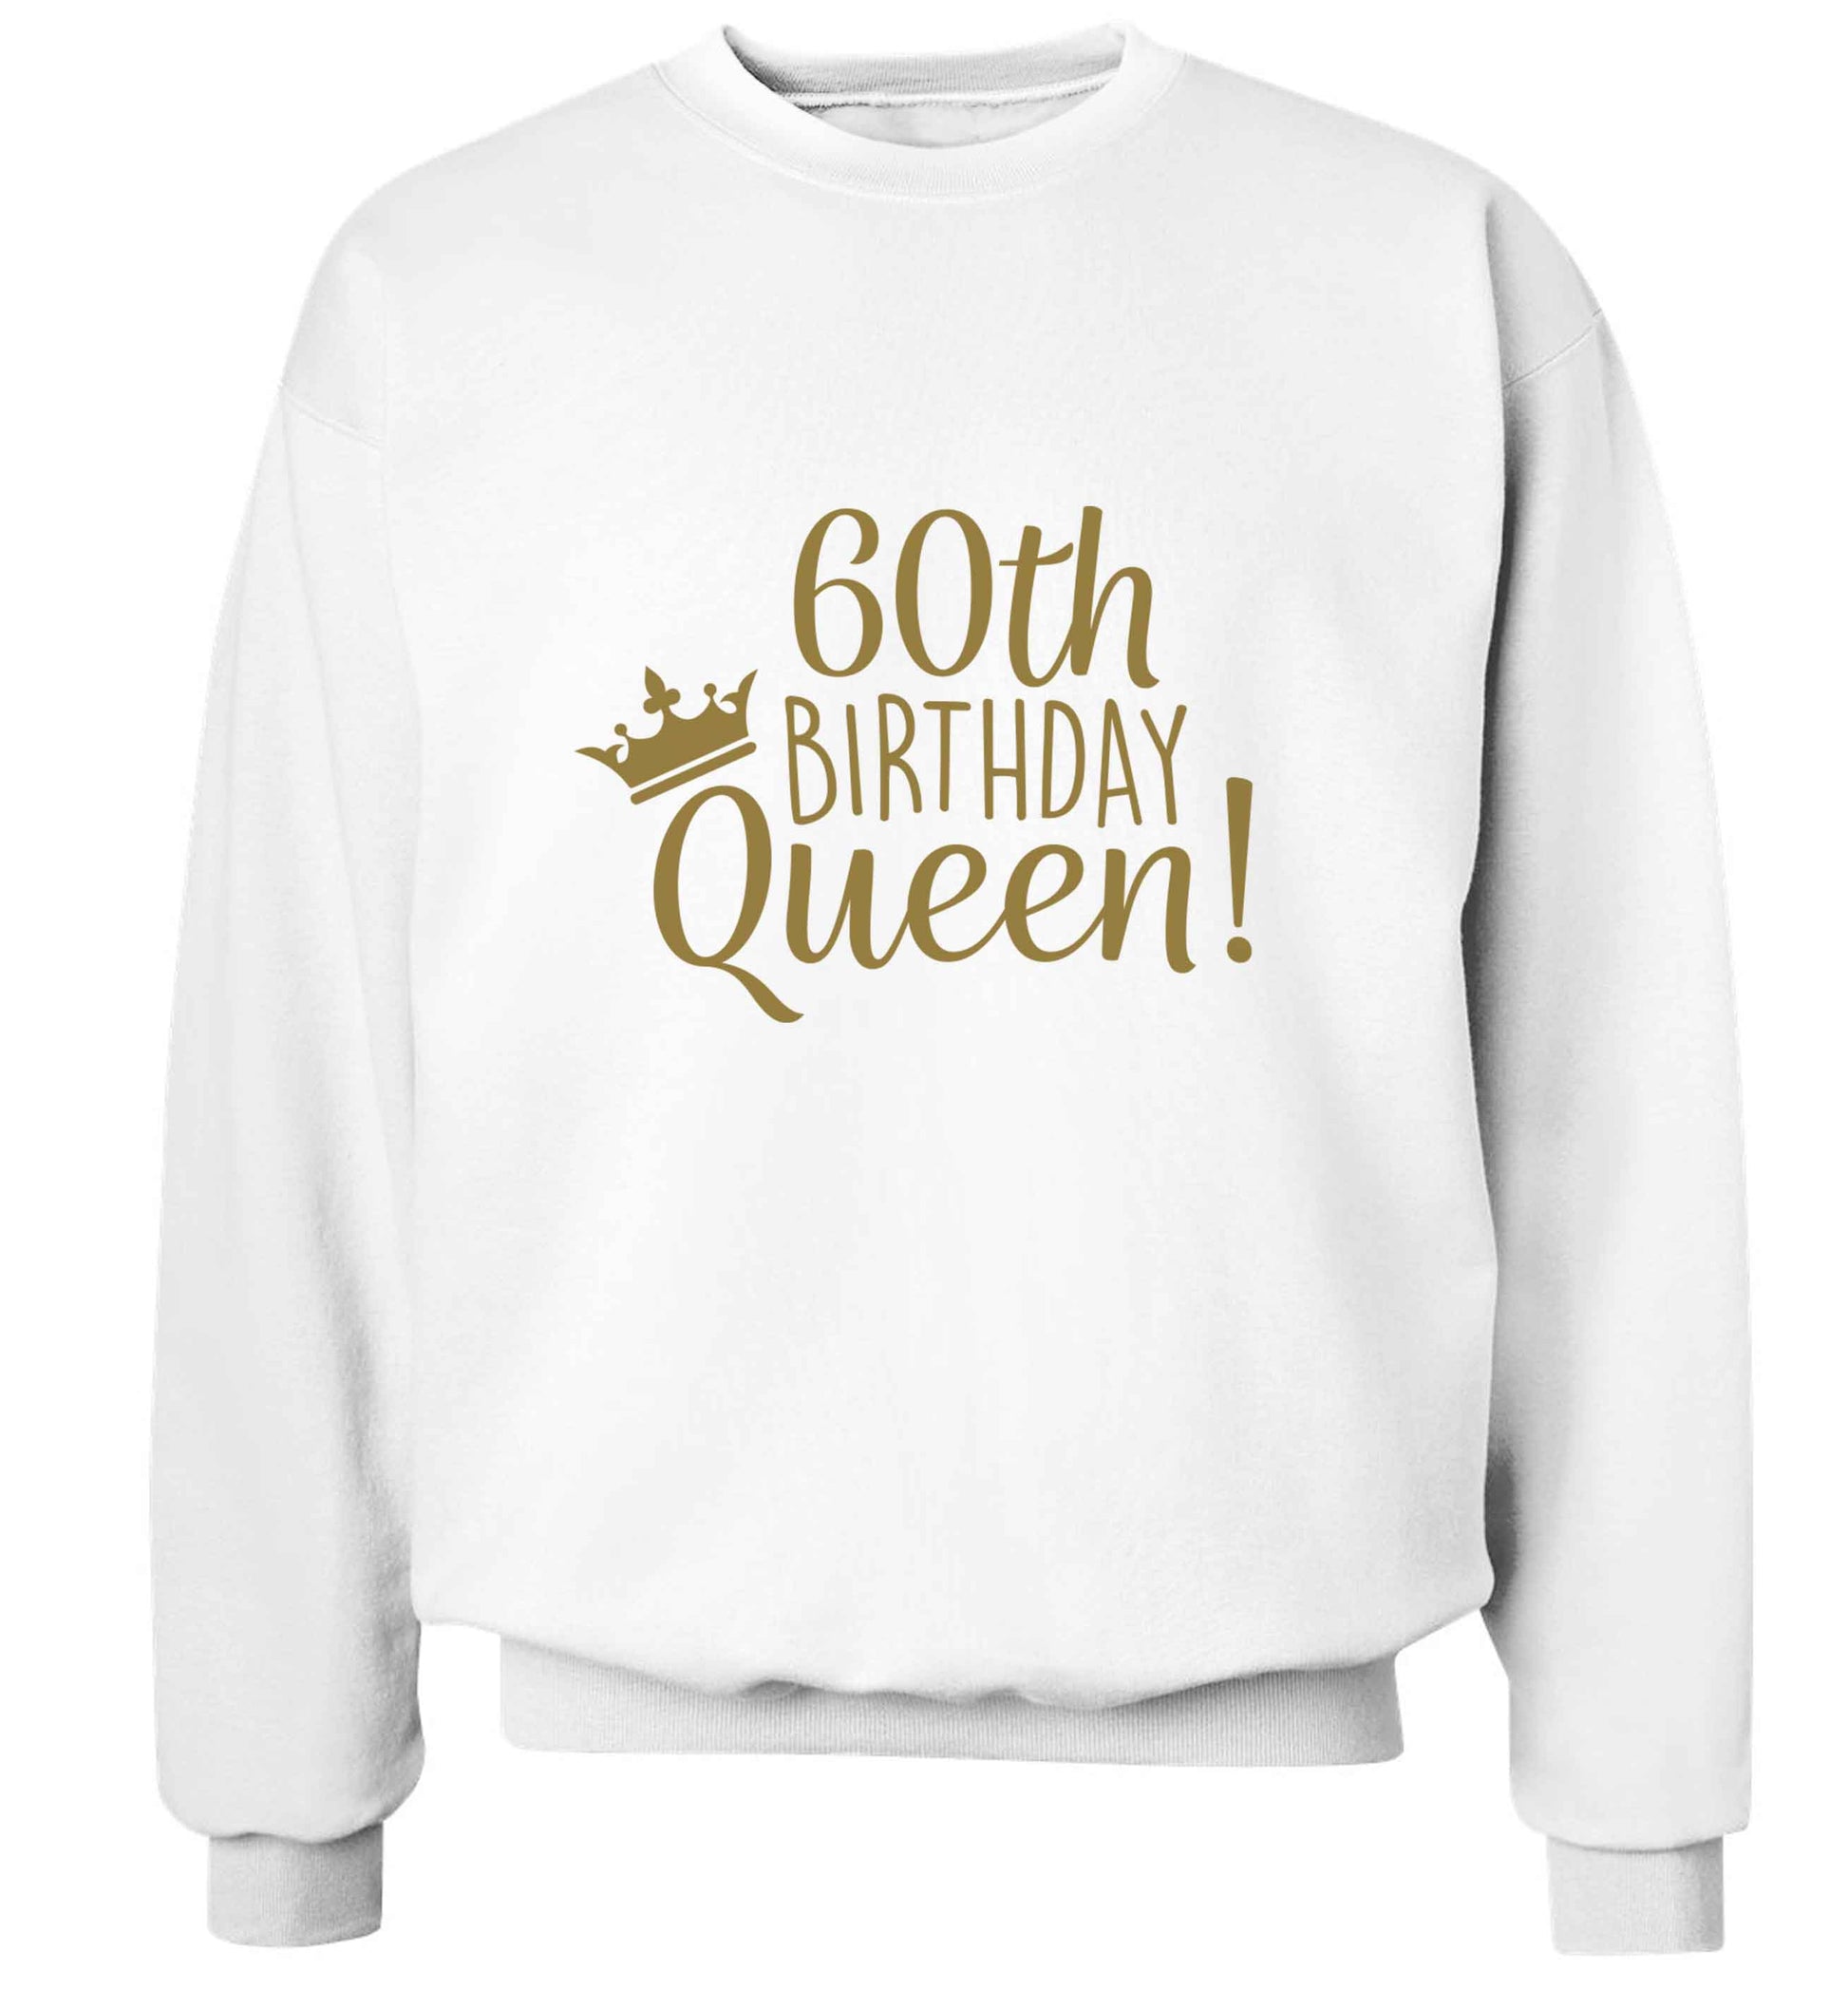 60th birthday Queen adult's unisex white sweater 2XL